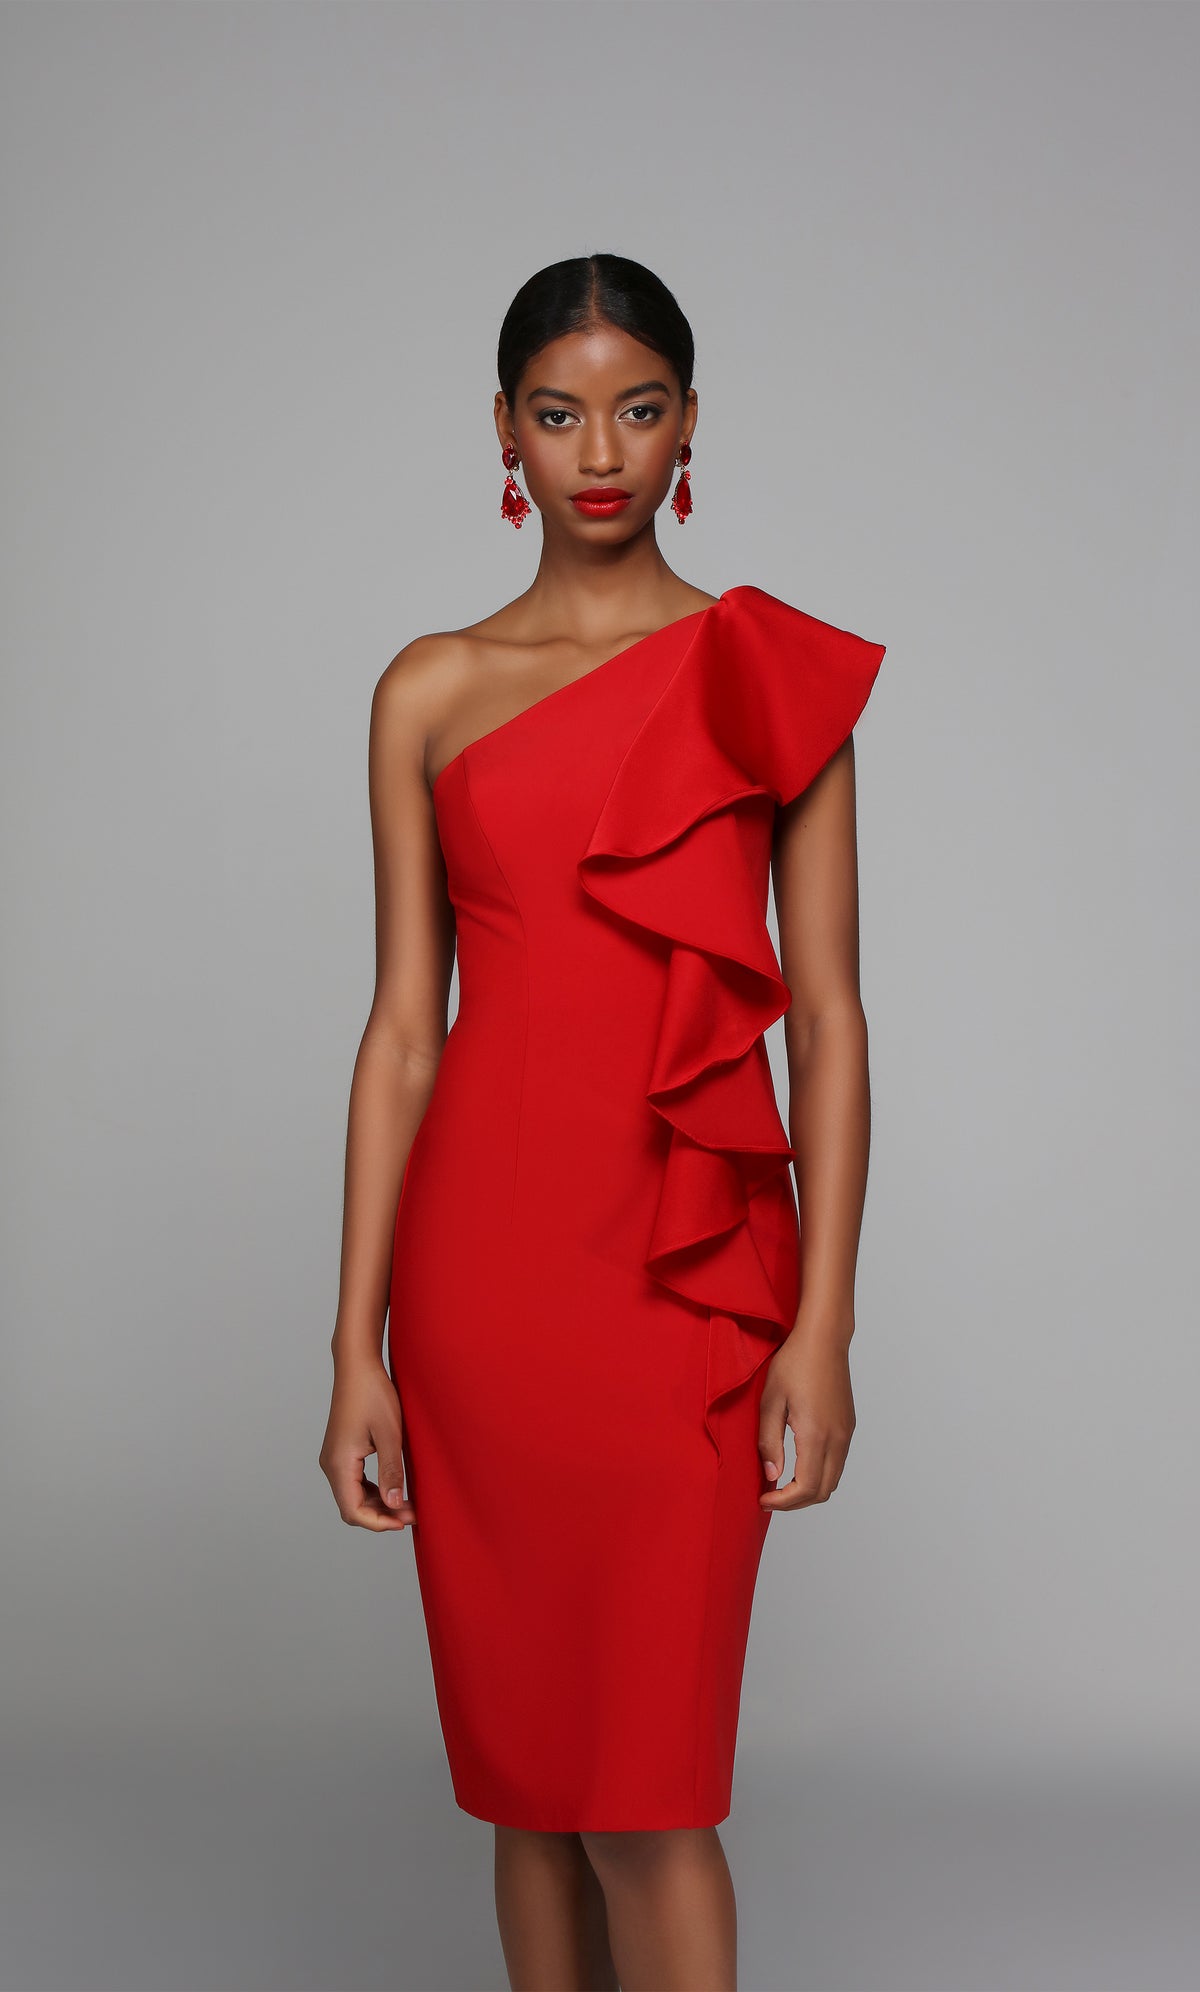 Red one shoulder midi dress enhanced with an elegant side ruffle.